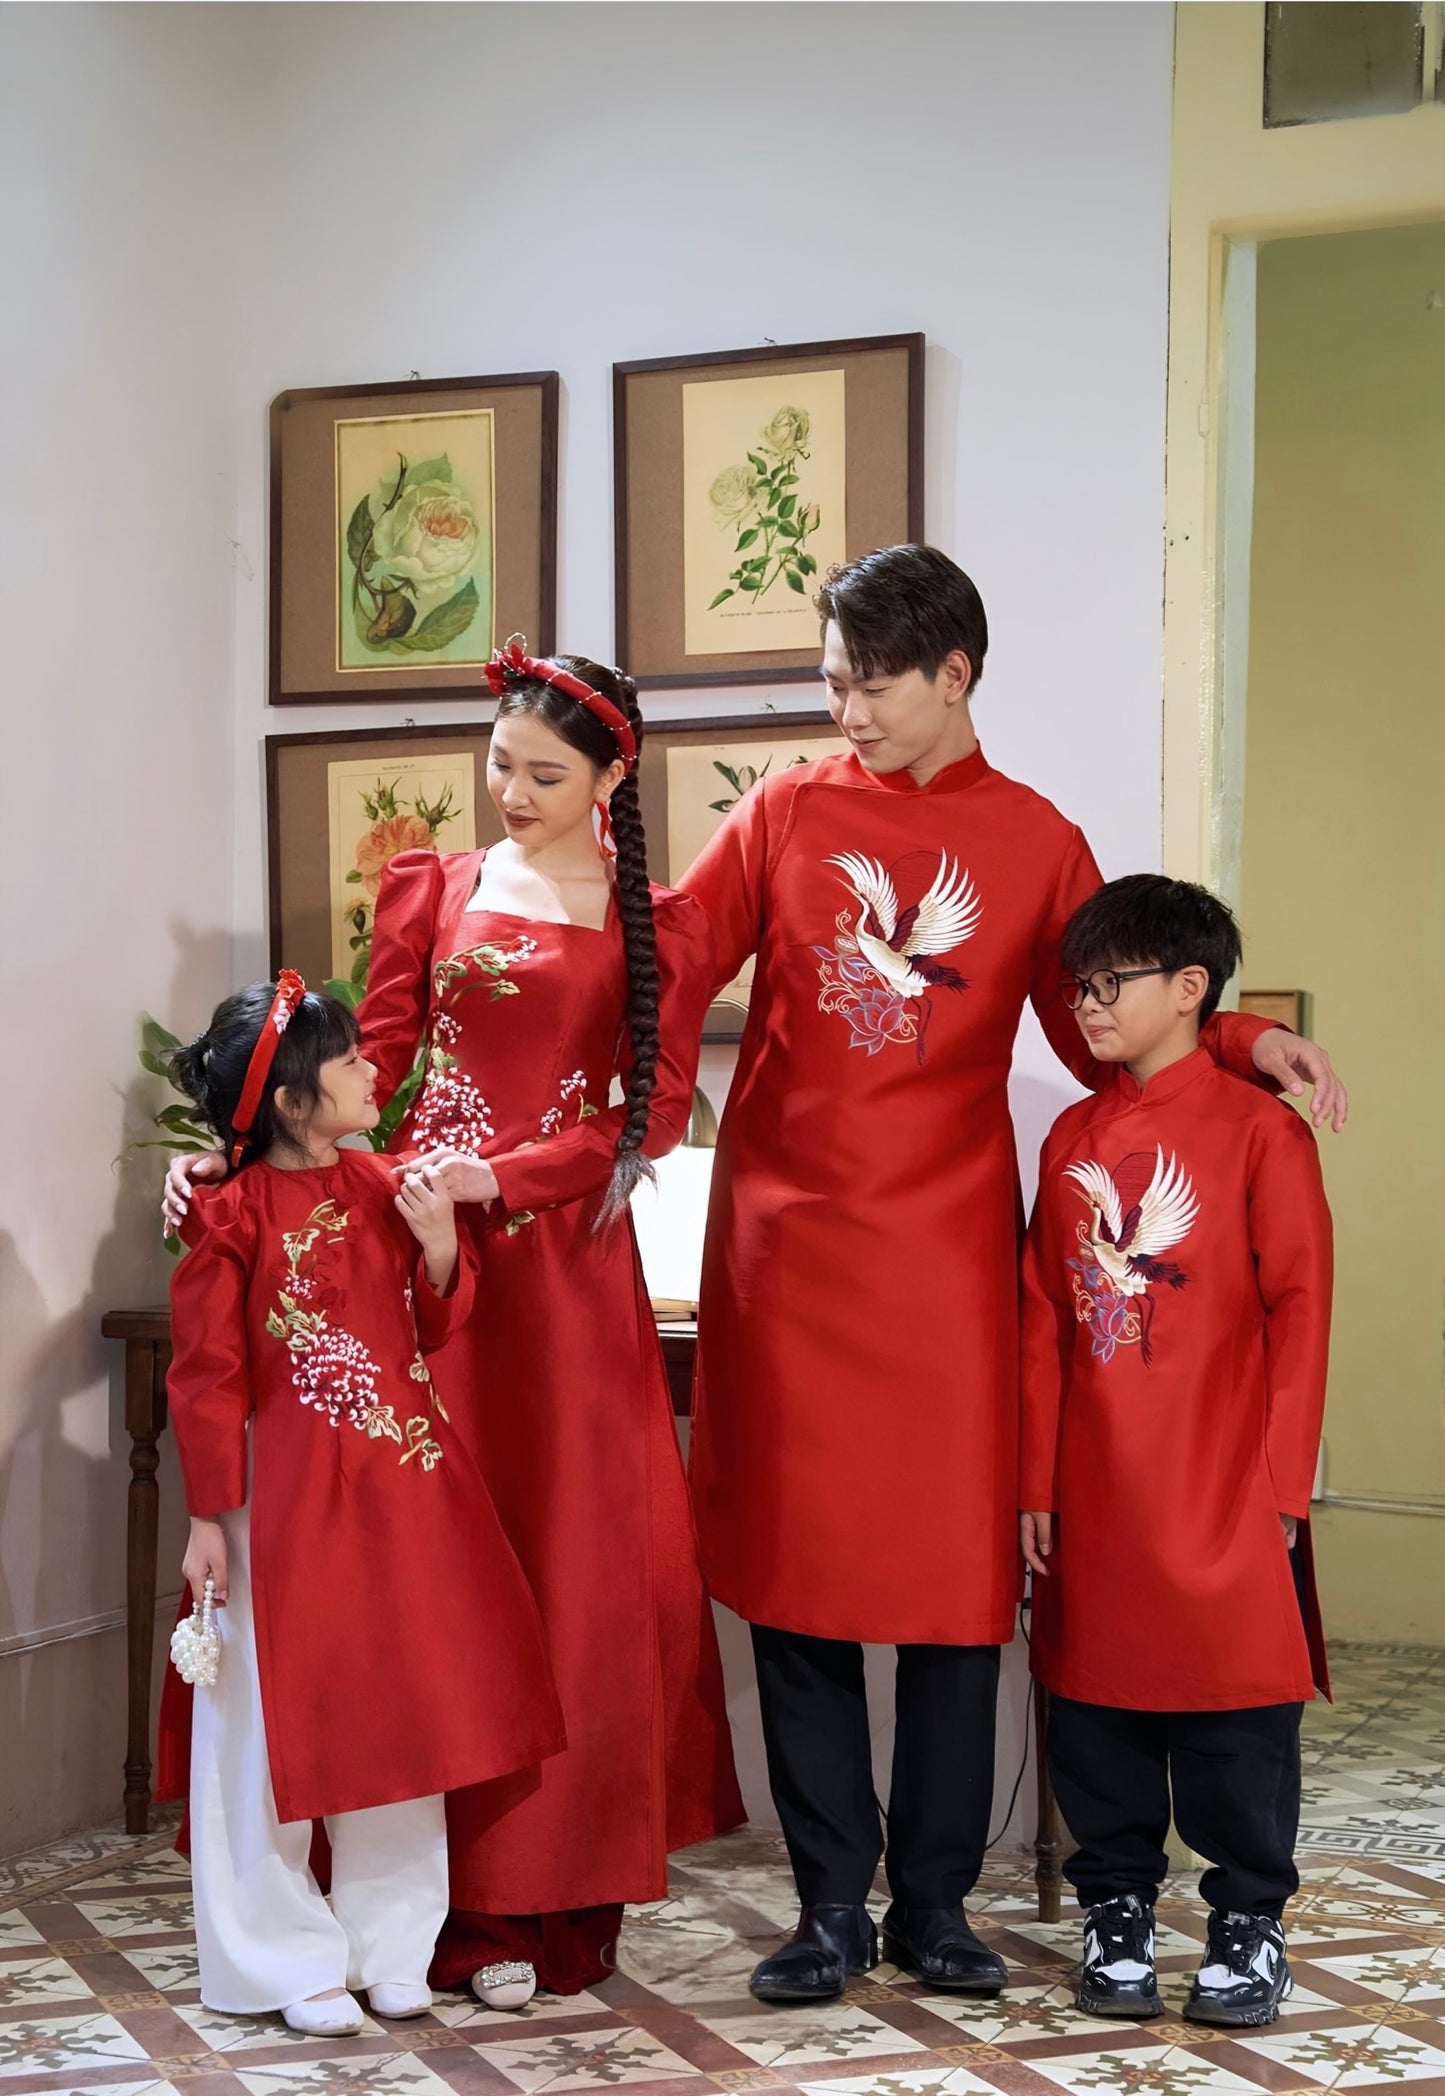 732 - Boy’s Áo Dài Tân Xuân Red (Family Ao Dai)